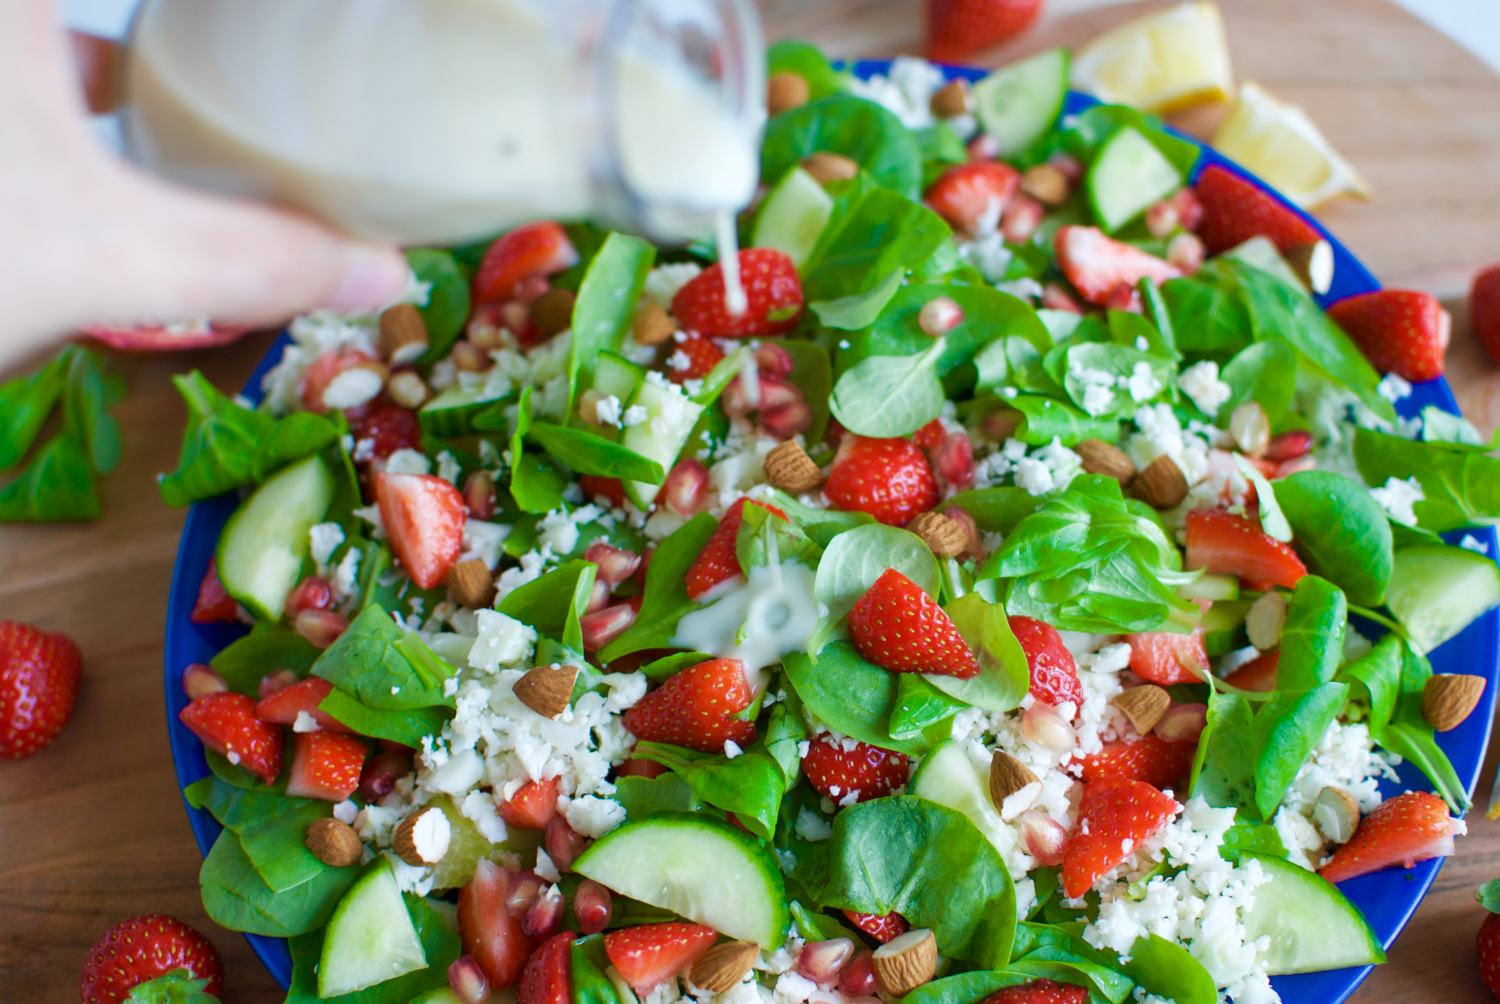 Summer salad with cauliflower and strawberries + a honey mustard dressing